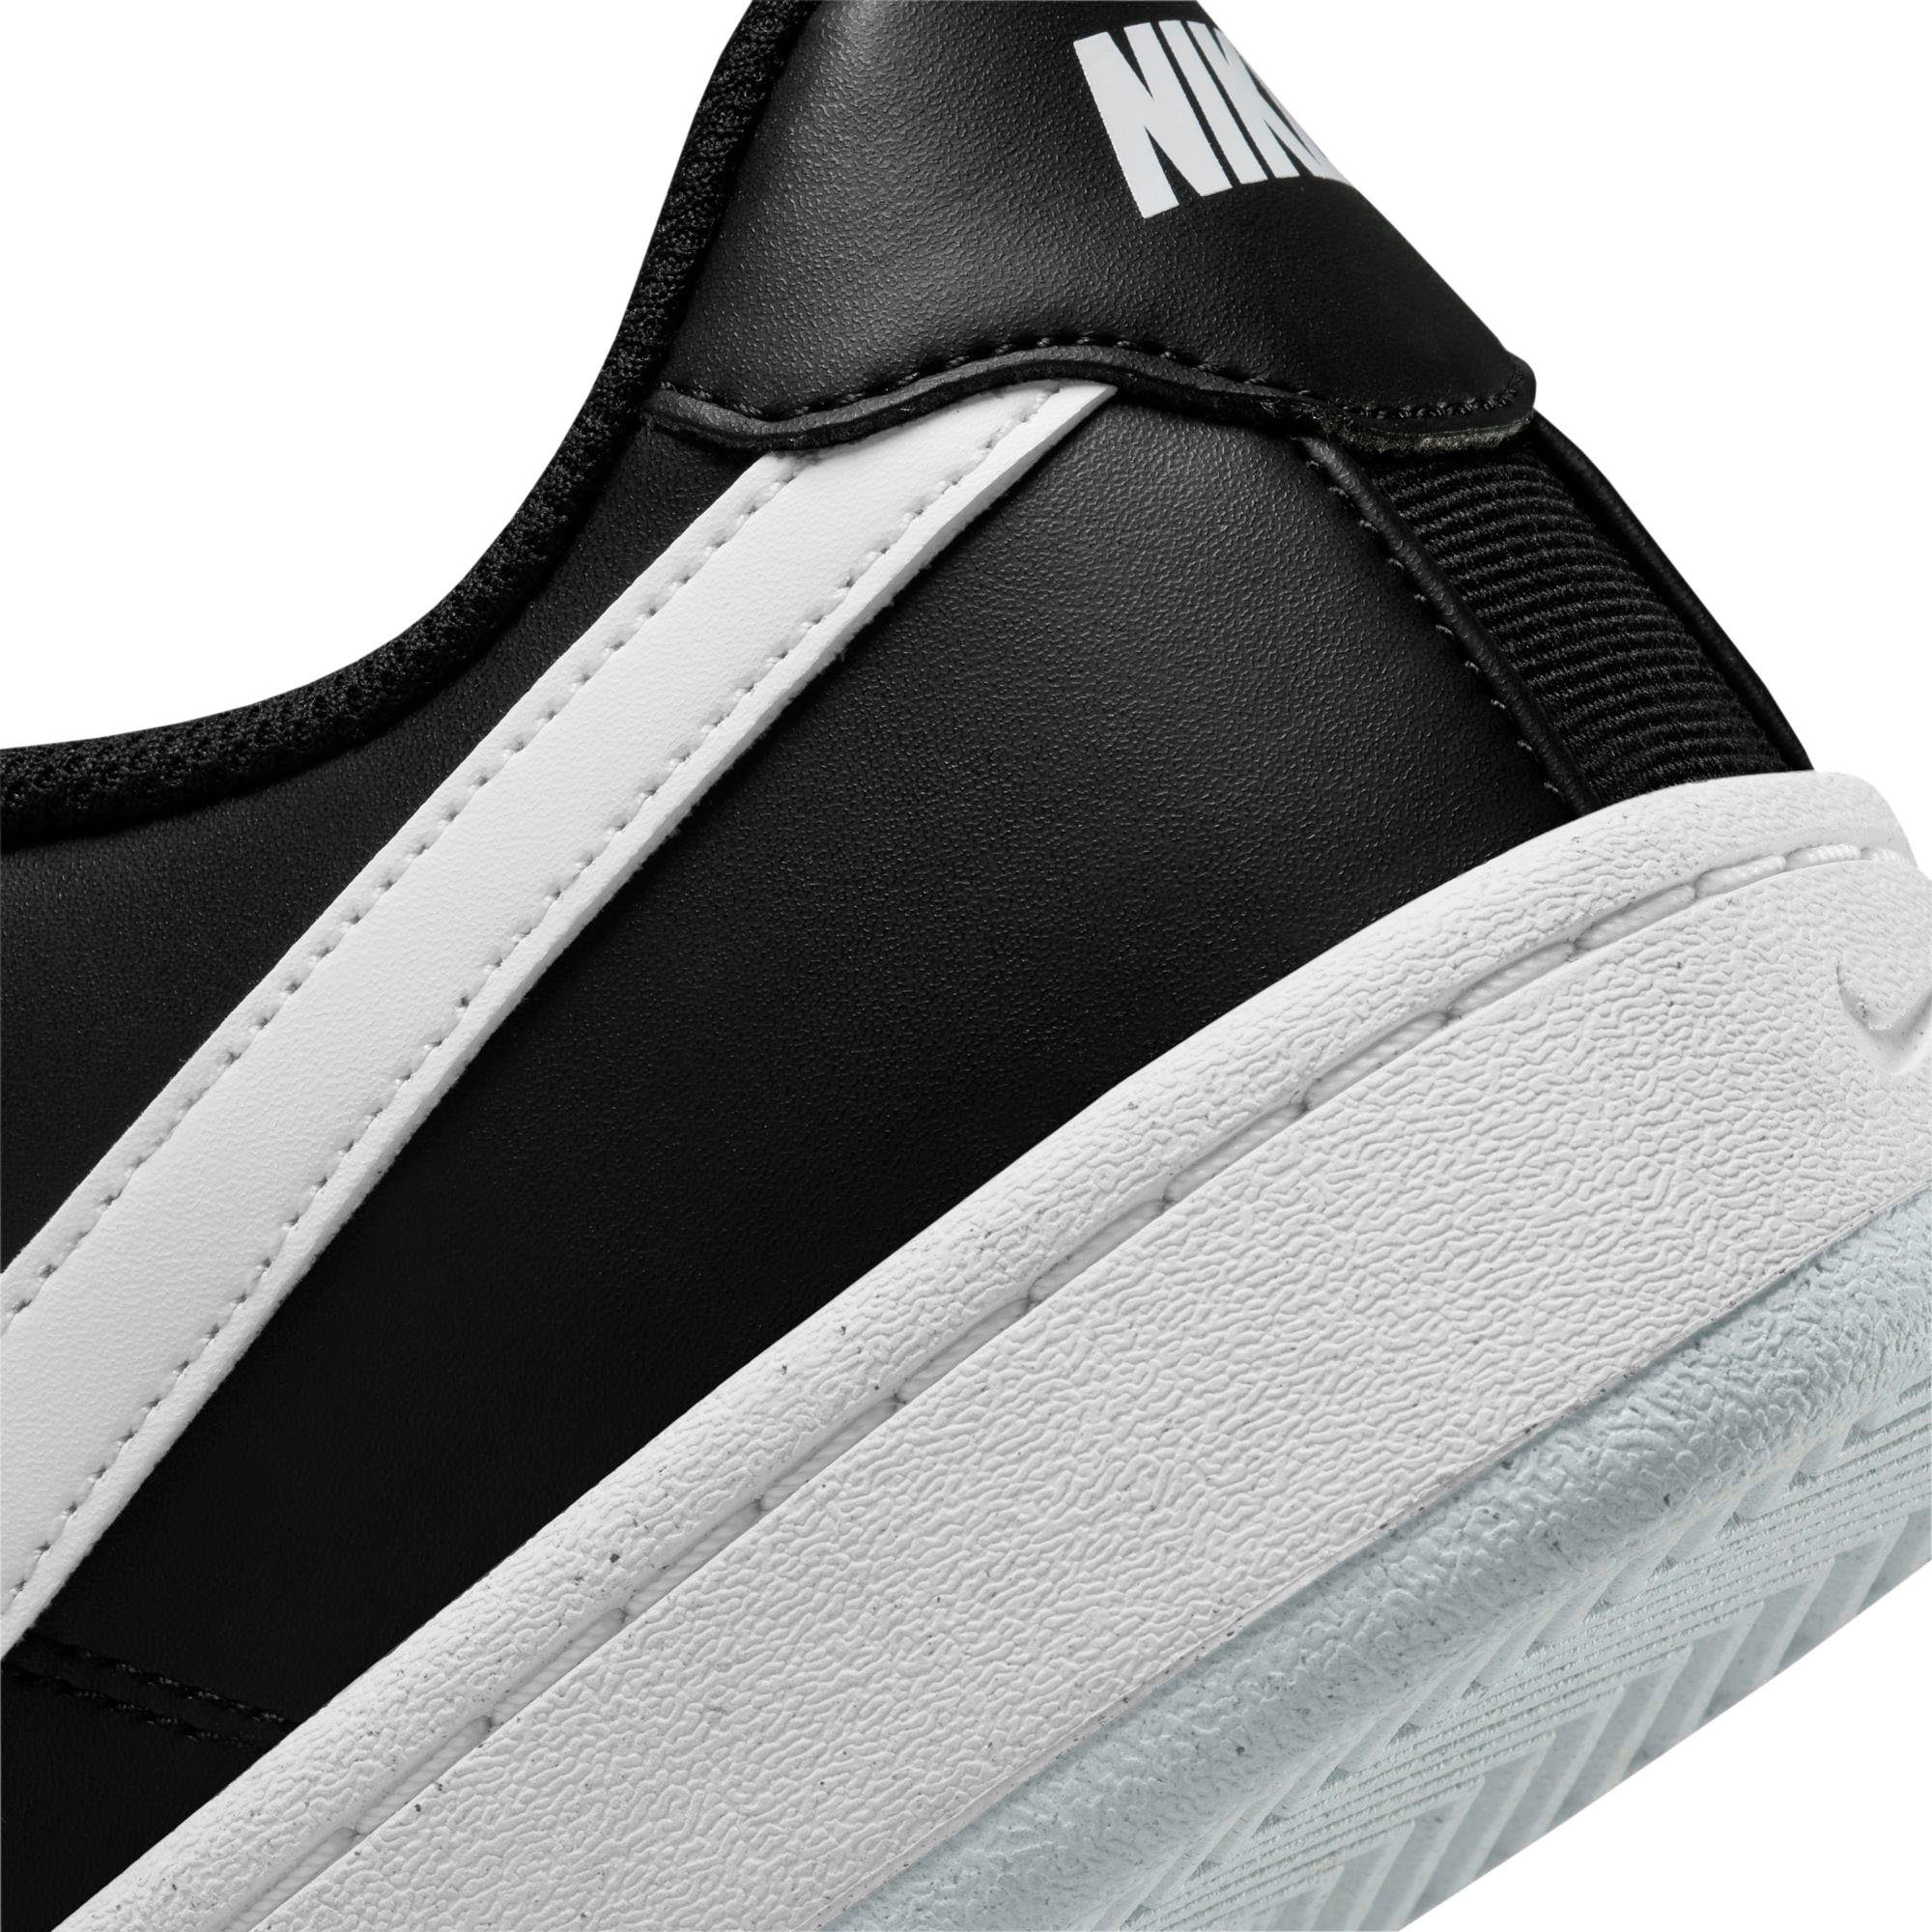 NEXT ROYALE Sportswear Nike 2 schwarz-weiß NATURE COURT Sneaker